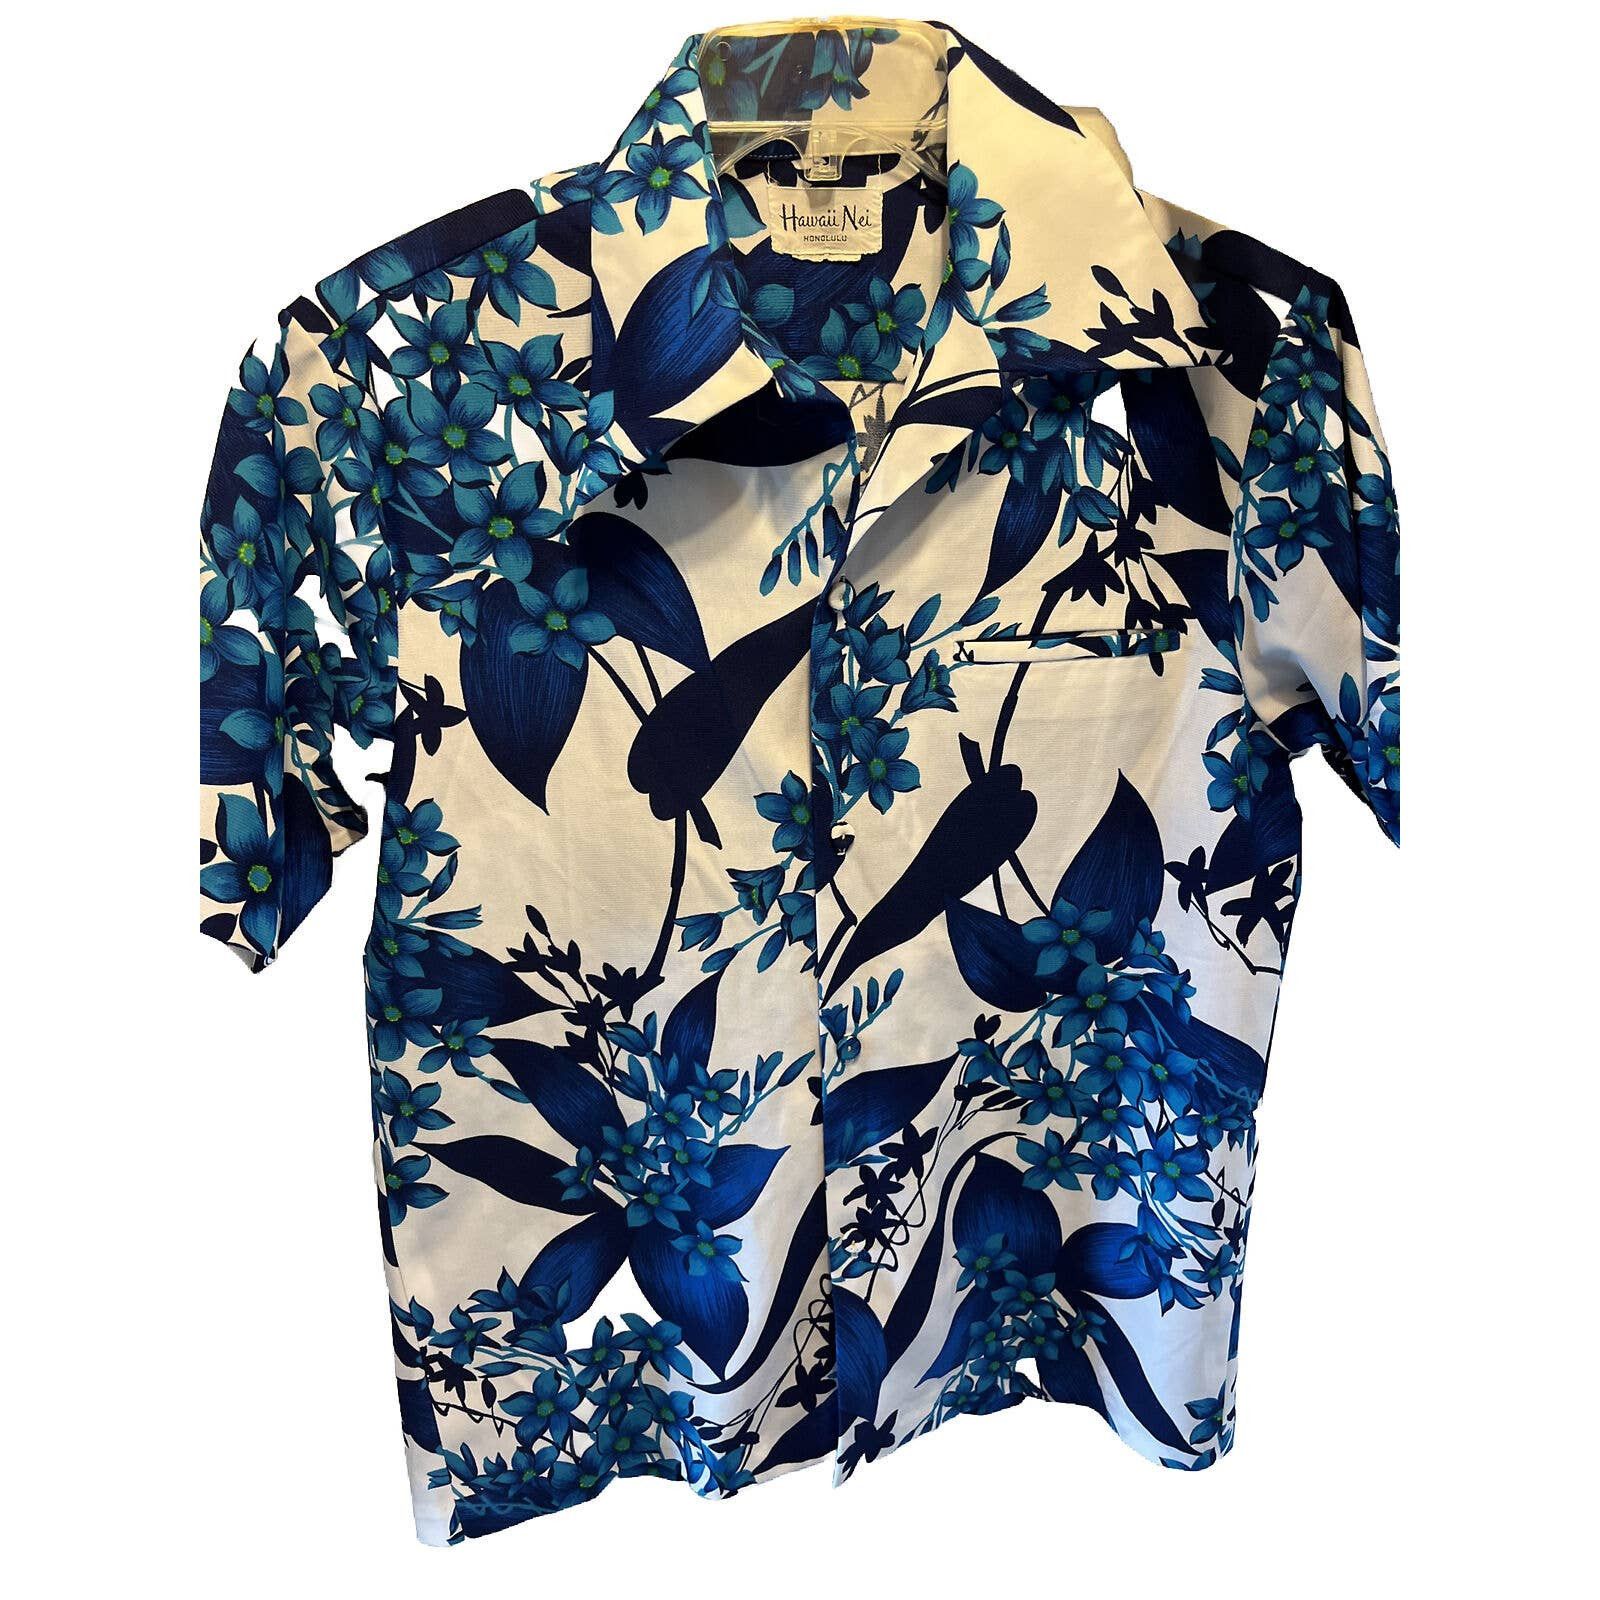 Other Hawaii Nei Honolulu VTG Mens M Blue Polyester Hawaiian Shirt Size US M / EU 48-50 / 2 - 5 Thumbnail